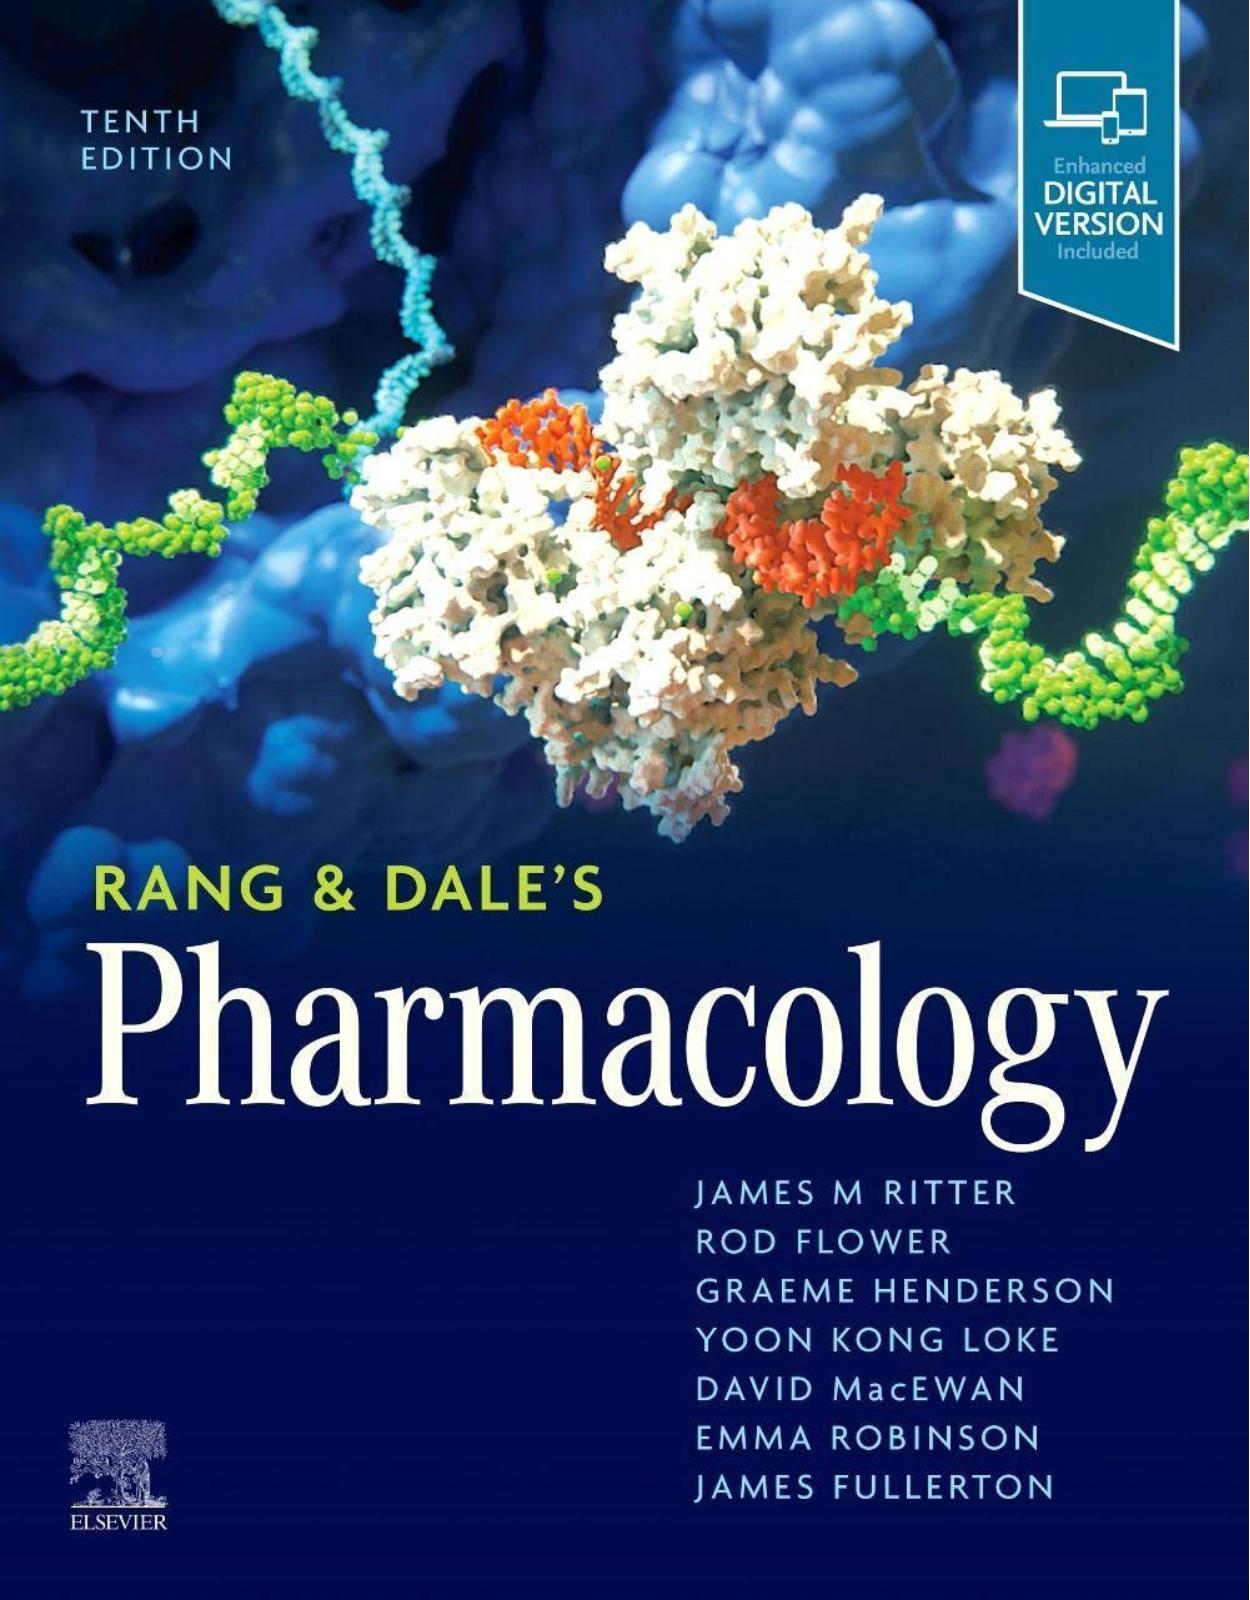 Rang & Dale’s Pharmacology